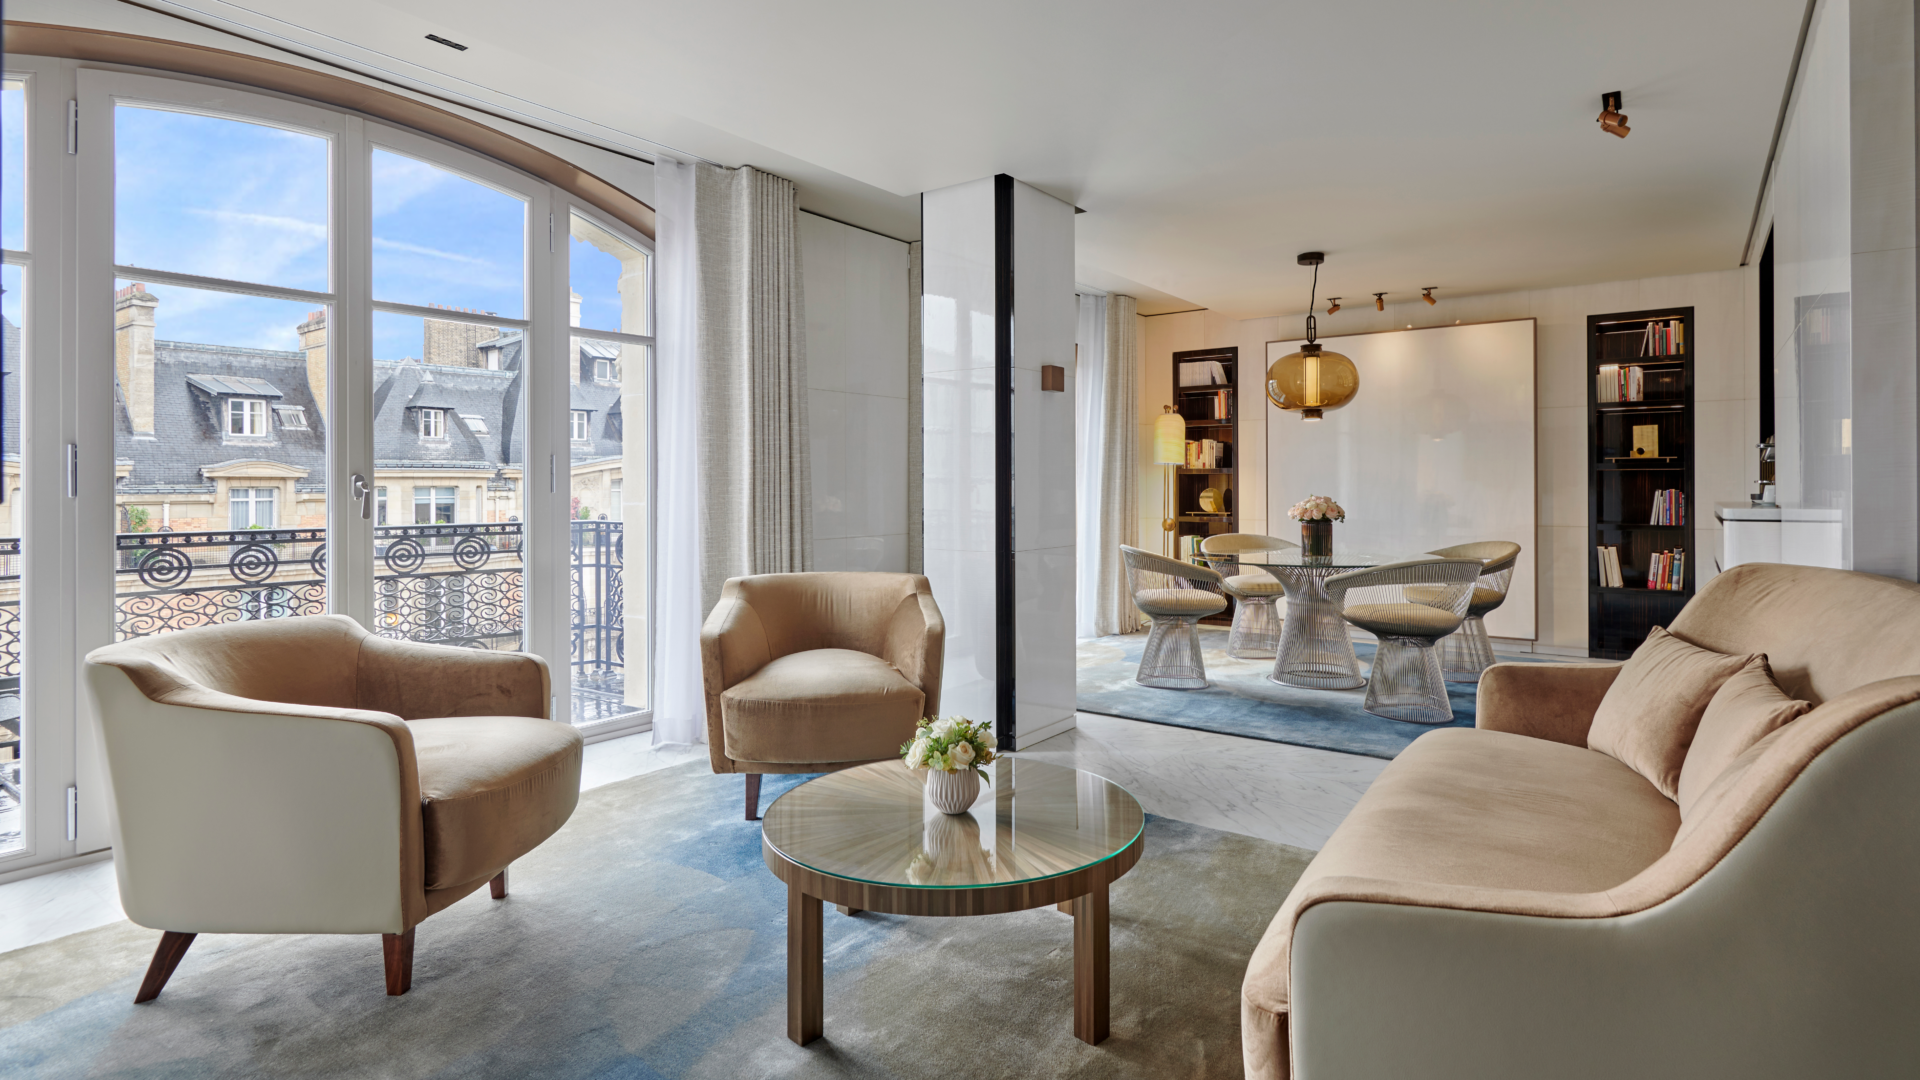 Lutetia Paris - Suite Isabelle Huppert - Living Room